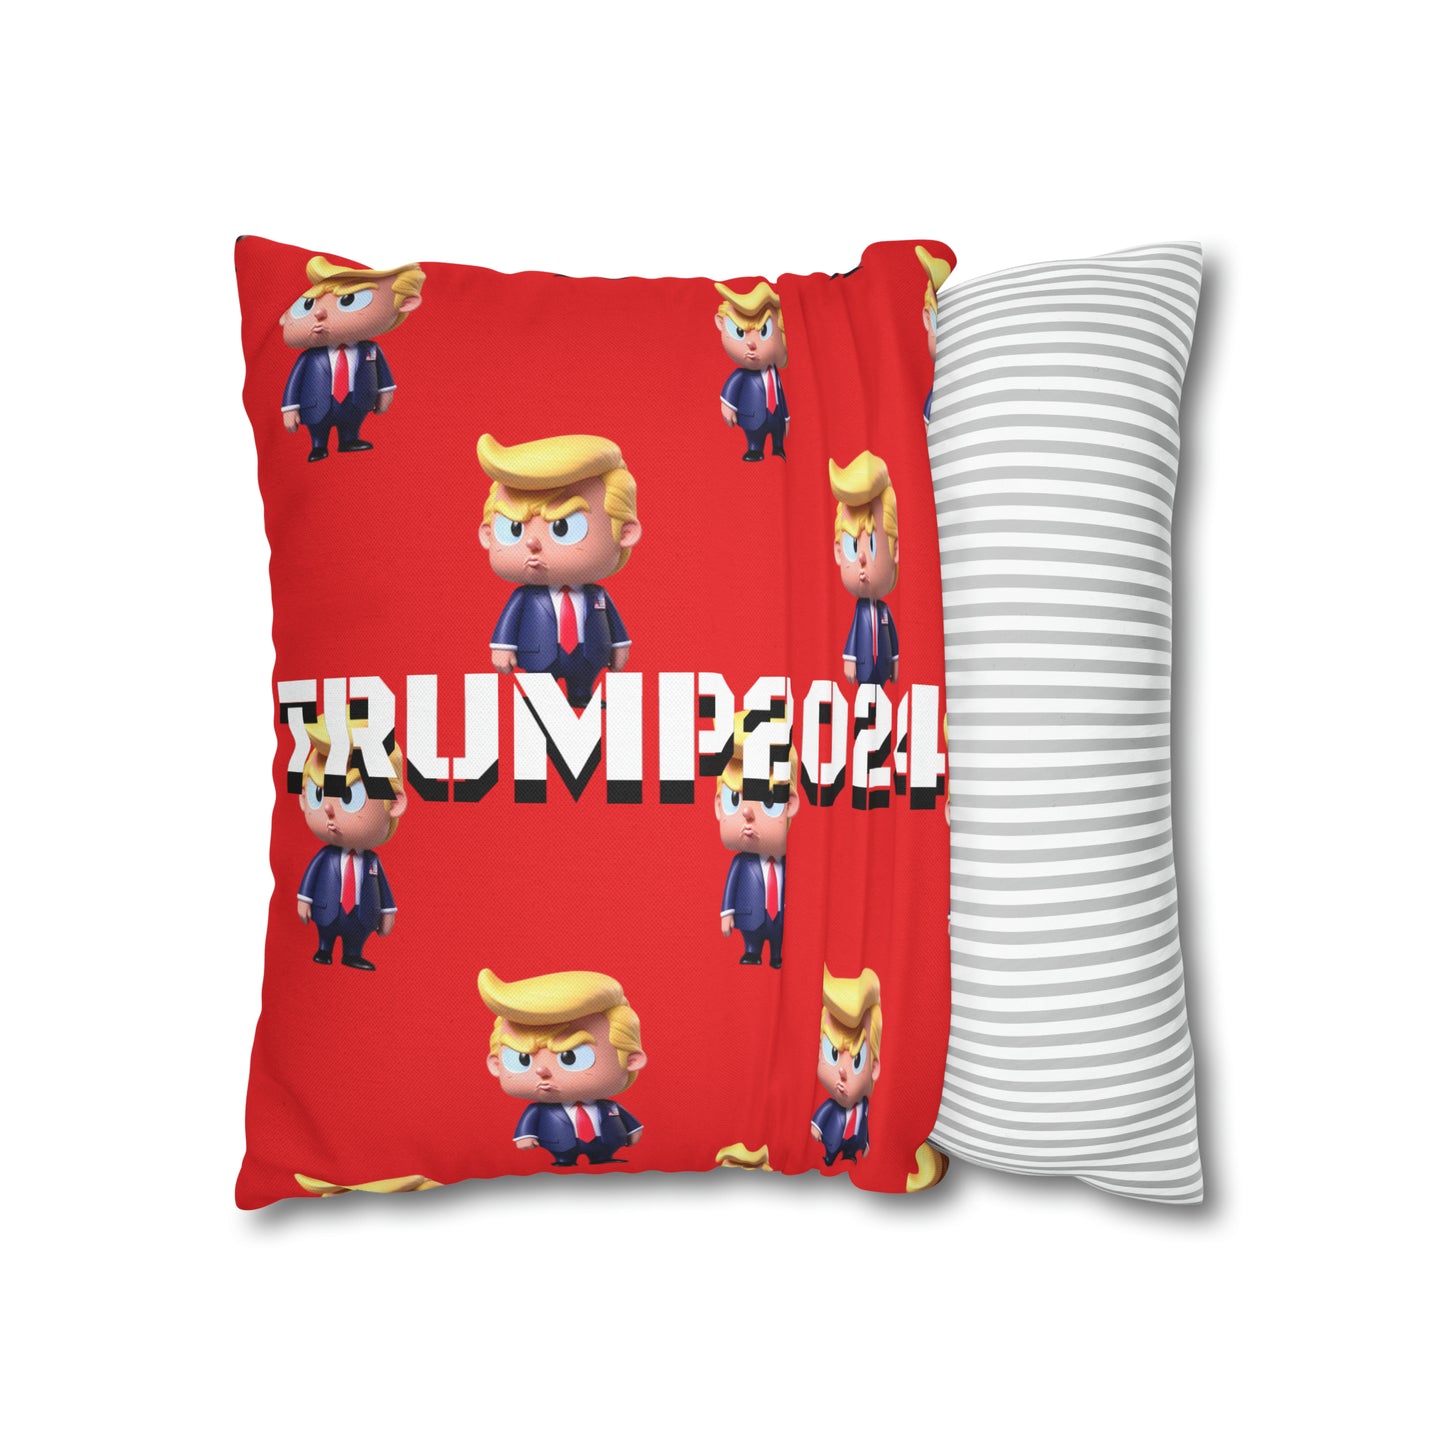 Little Trump 2024 Republican Red Soft Comfy Throw Pillow Case MAGA Gift